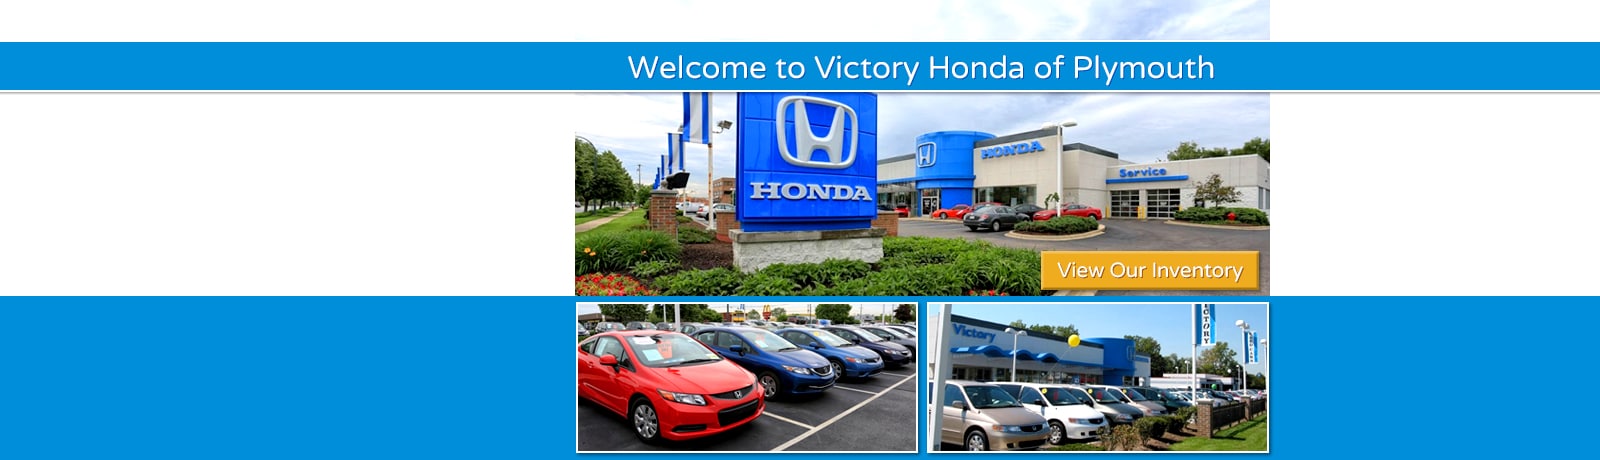 Honda dealership near brighton mi #6